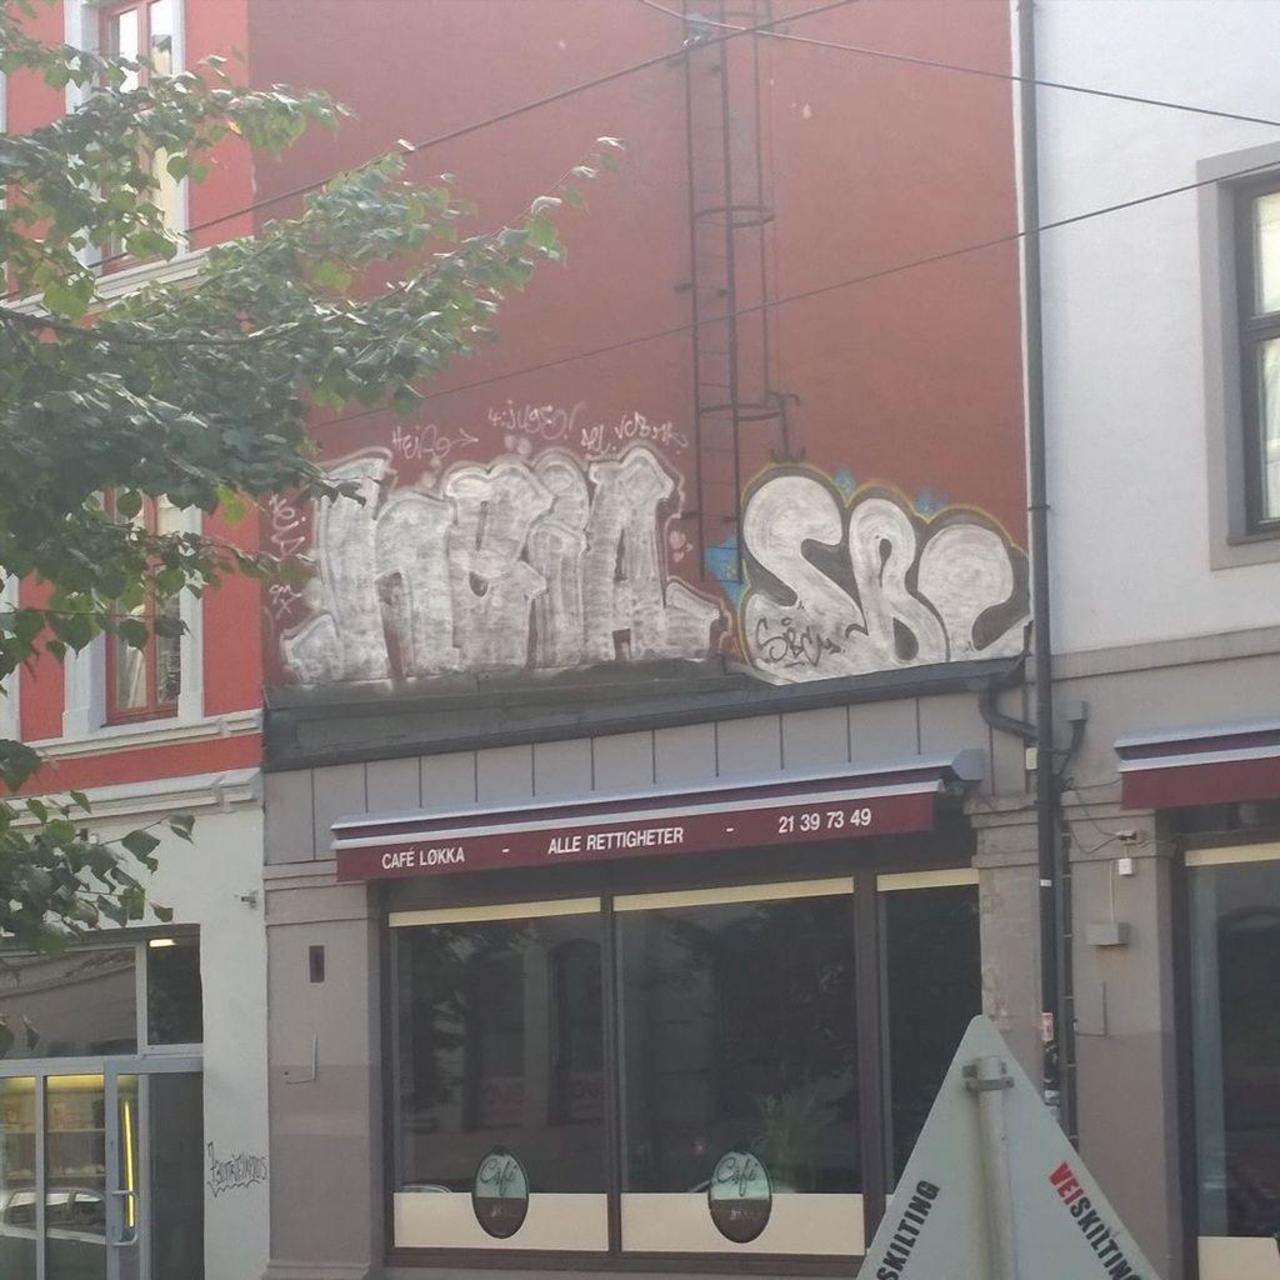 RT @artpushr: via #masta244 "http://bit.ly/1M3Xhia" #graffiti #streetart http://t.co/R09tEWJIlz